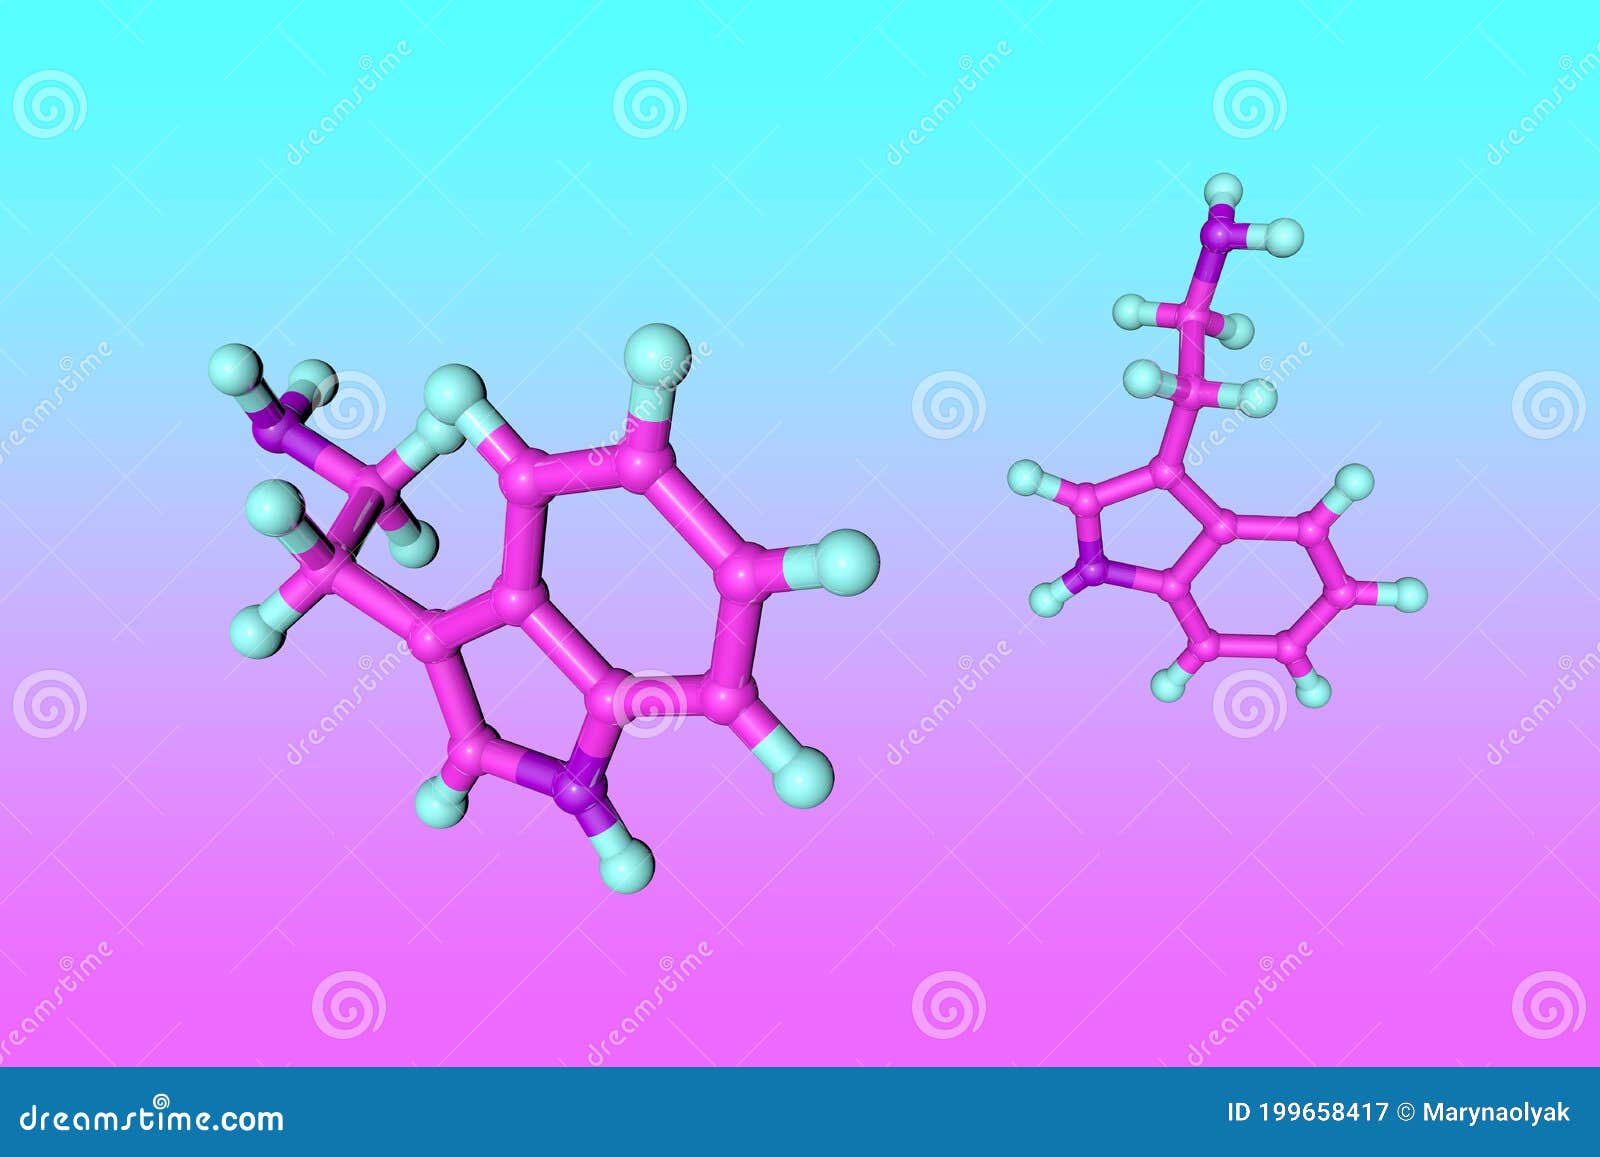 molecular model of tryptamine, a monoamine alkaloid, structurally similar to the amino acid tryptophan. scientific